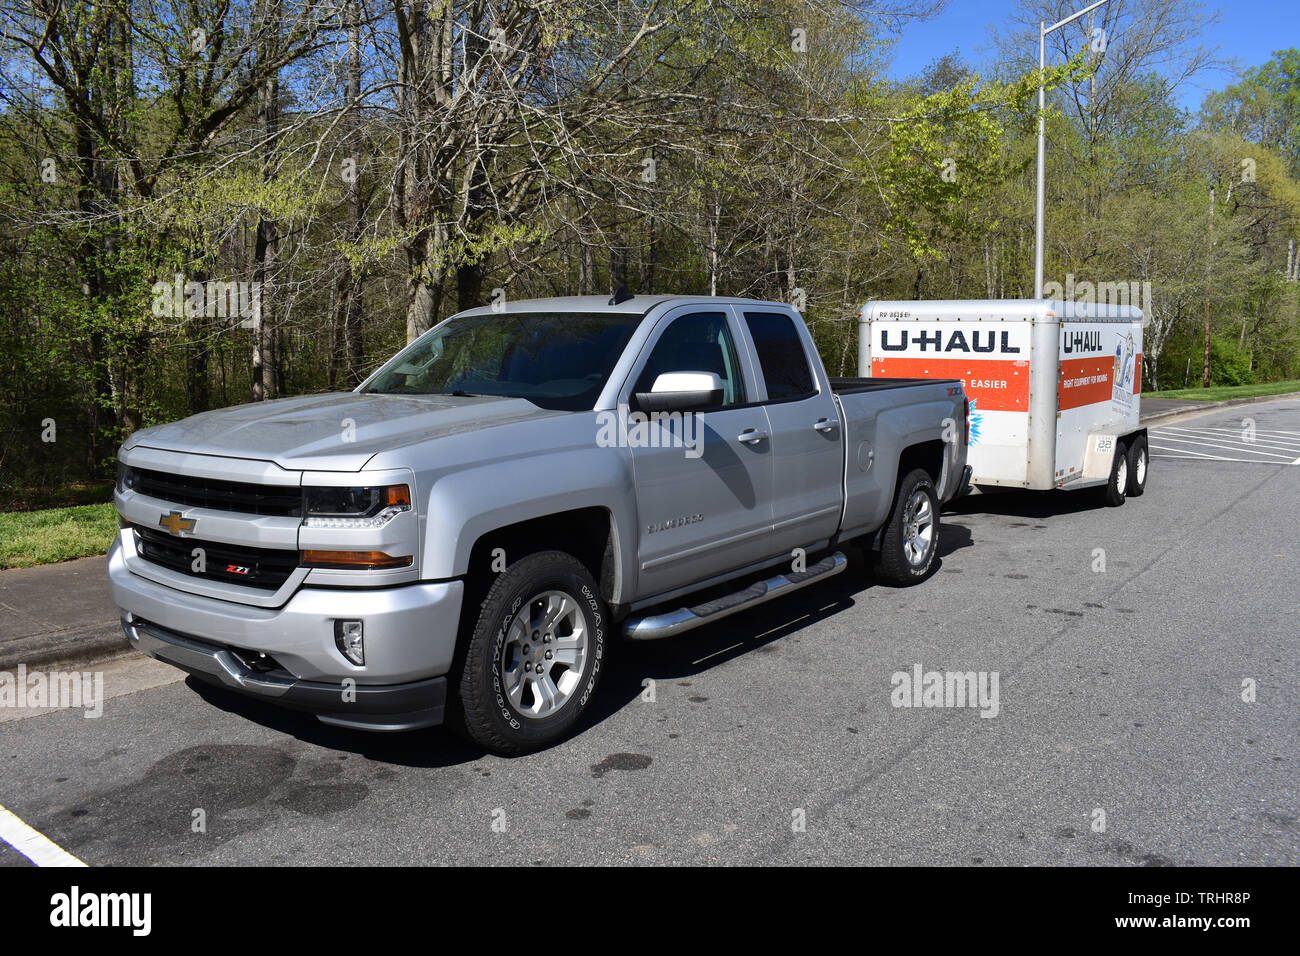 A 2018 Chevrolet Silverado Pickup Truck pulling a U-Haul trailer. Stock Photo